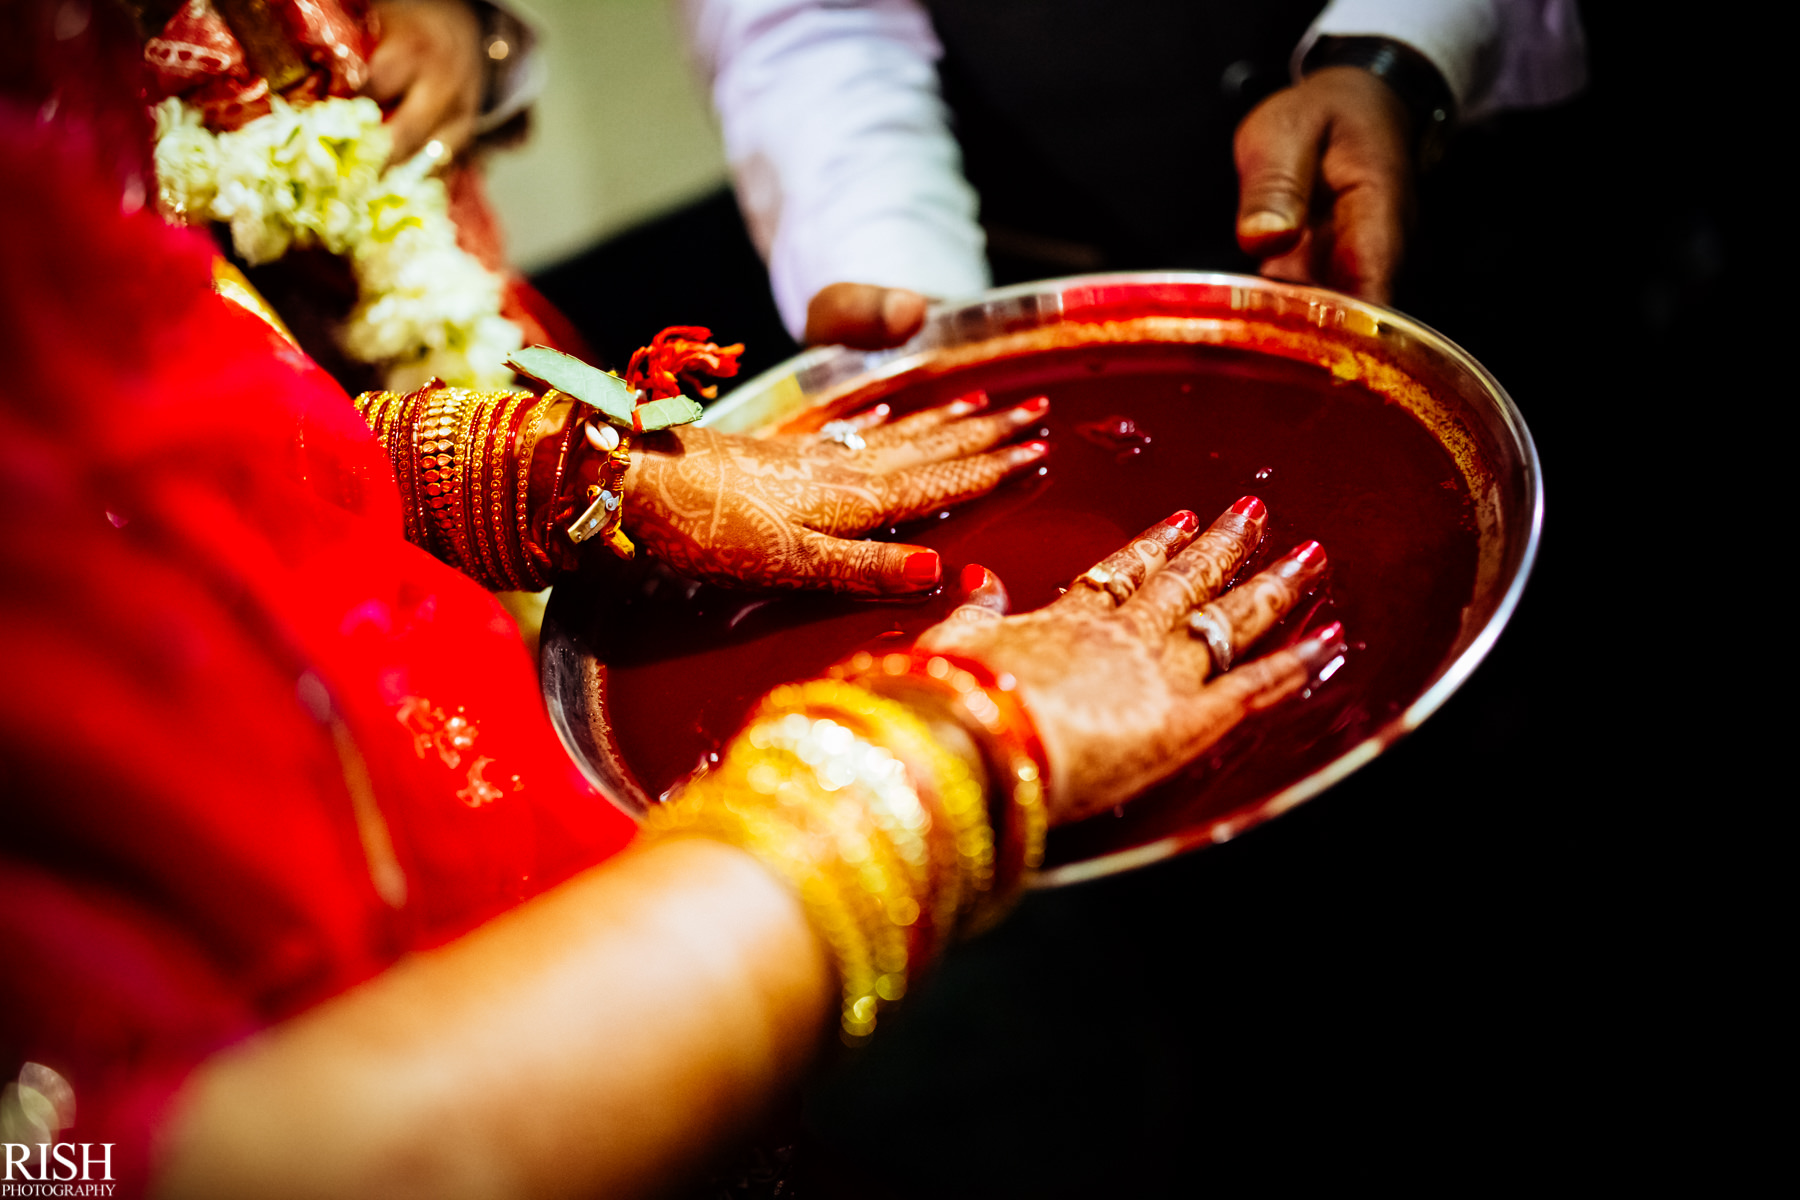 Best Candid Wedding Photographer in Delhi India